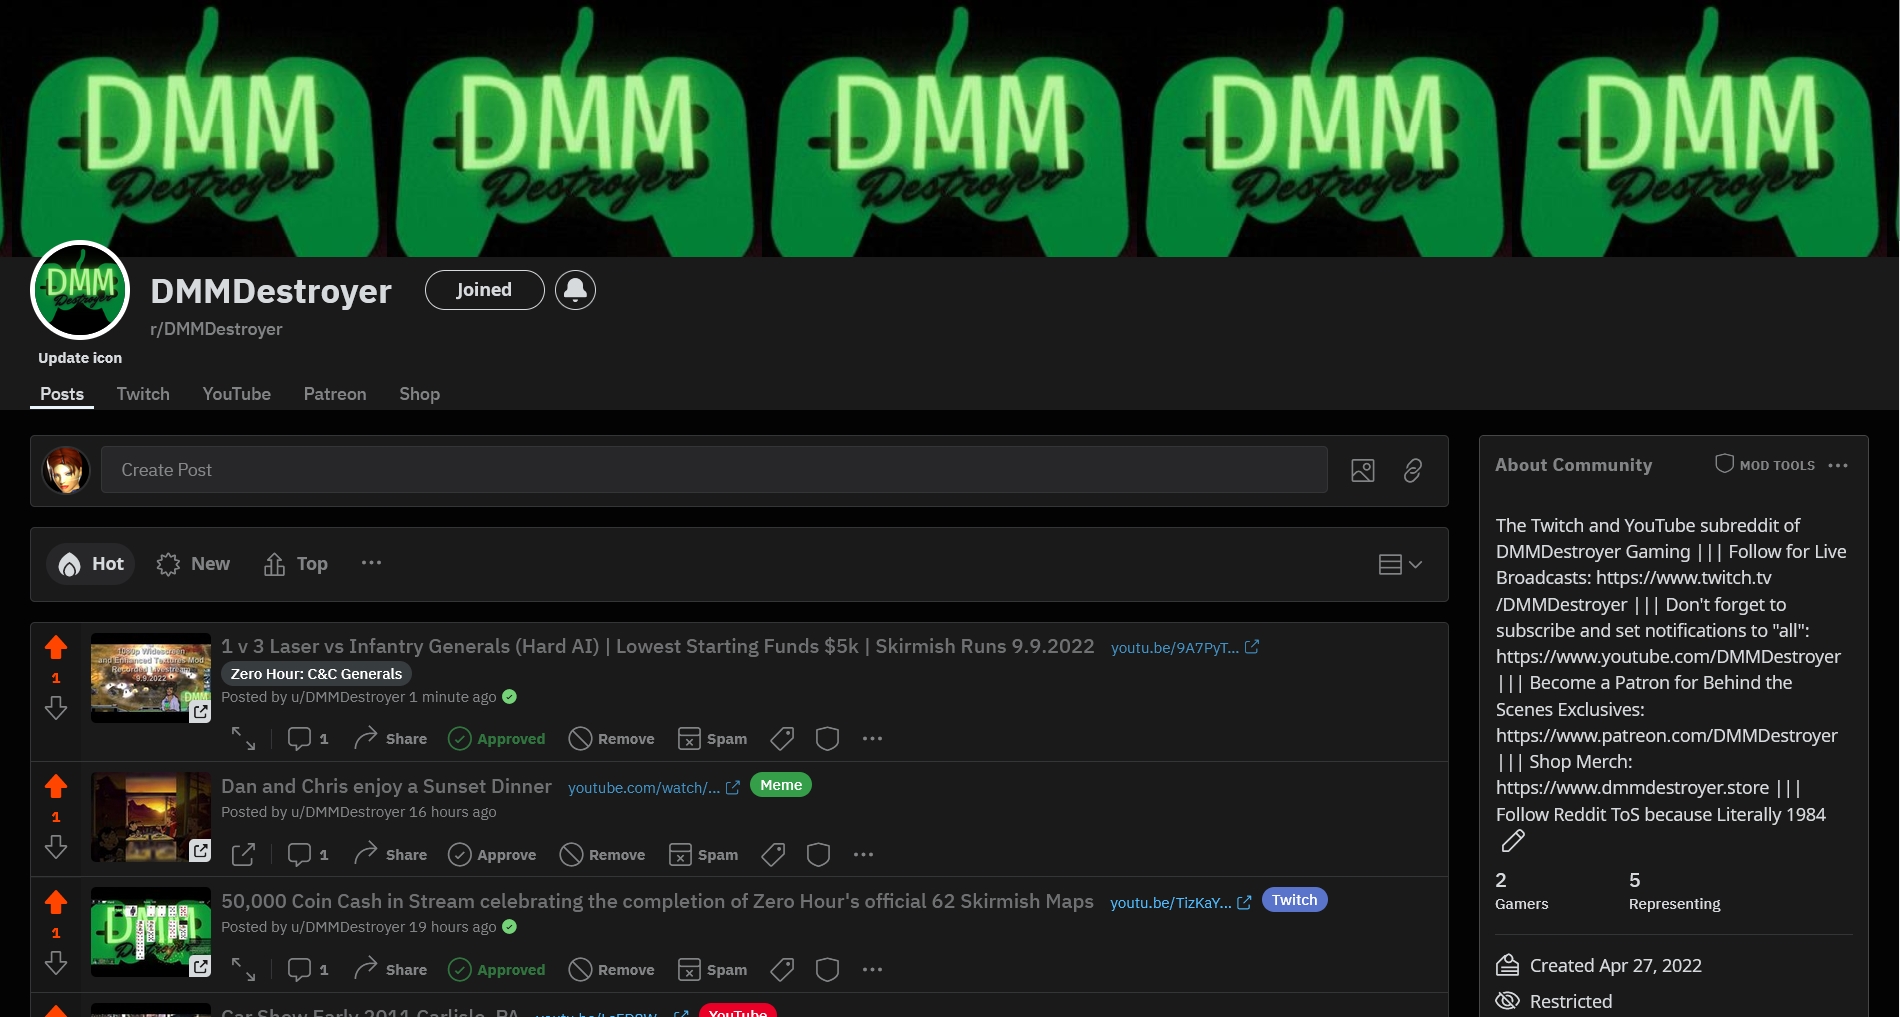 DMMDestroyer Subreddit Preview